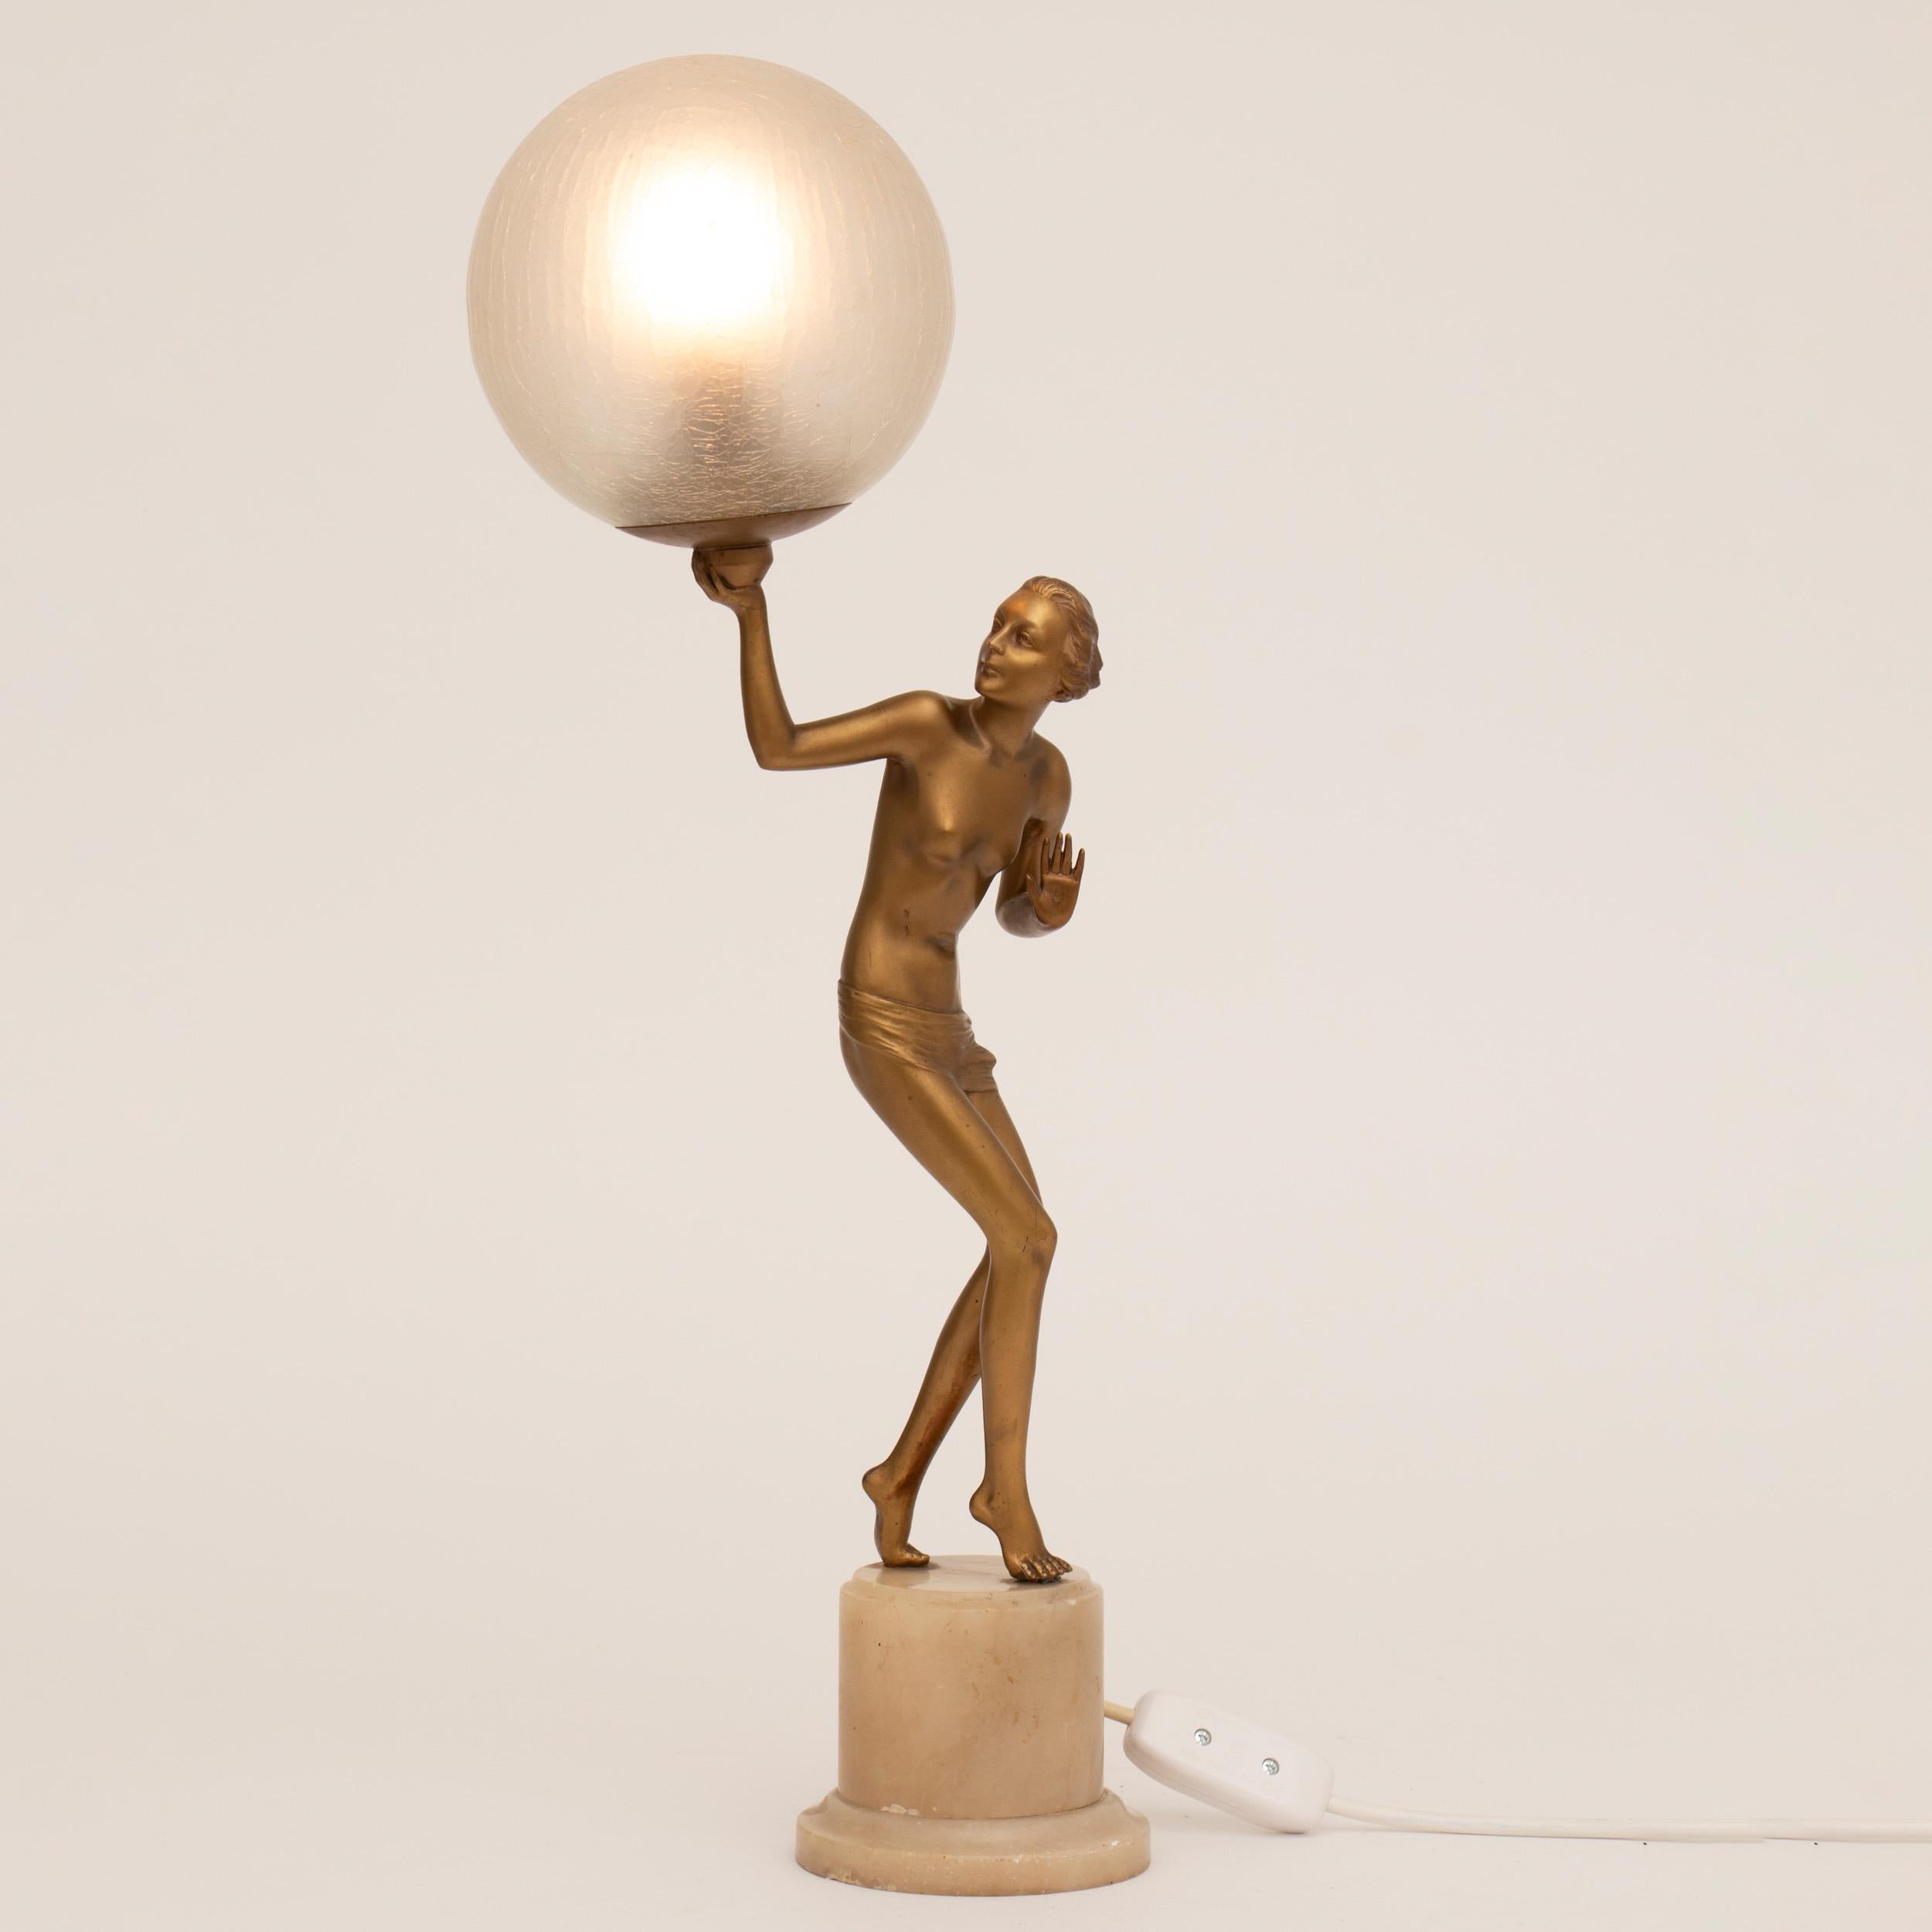 Semi nude Art Deco figure lamp holding aloft a crackle glaze illuminating globe, raise on a marble plinth.
A figure by Lorenzl.
Measures: H 60cm W 21cm D 24cm
French circa 1930.